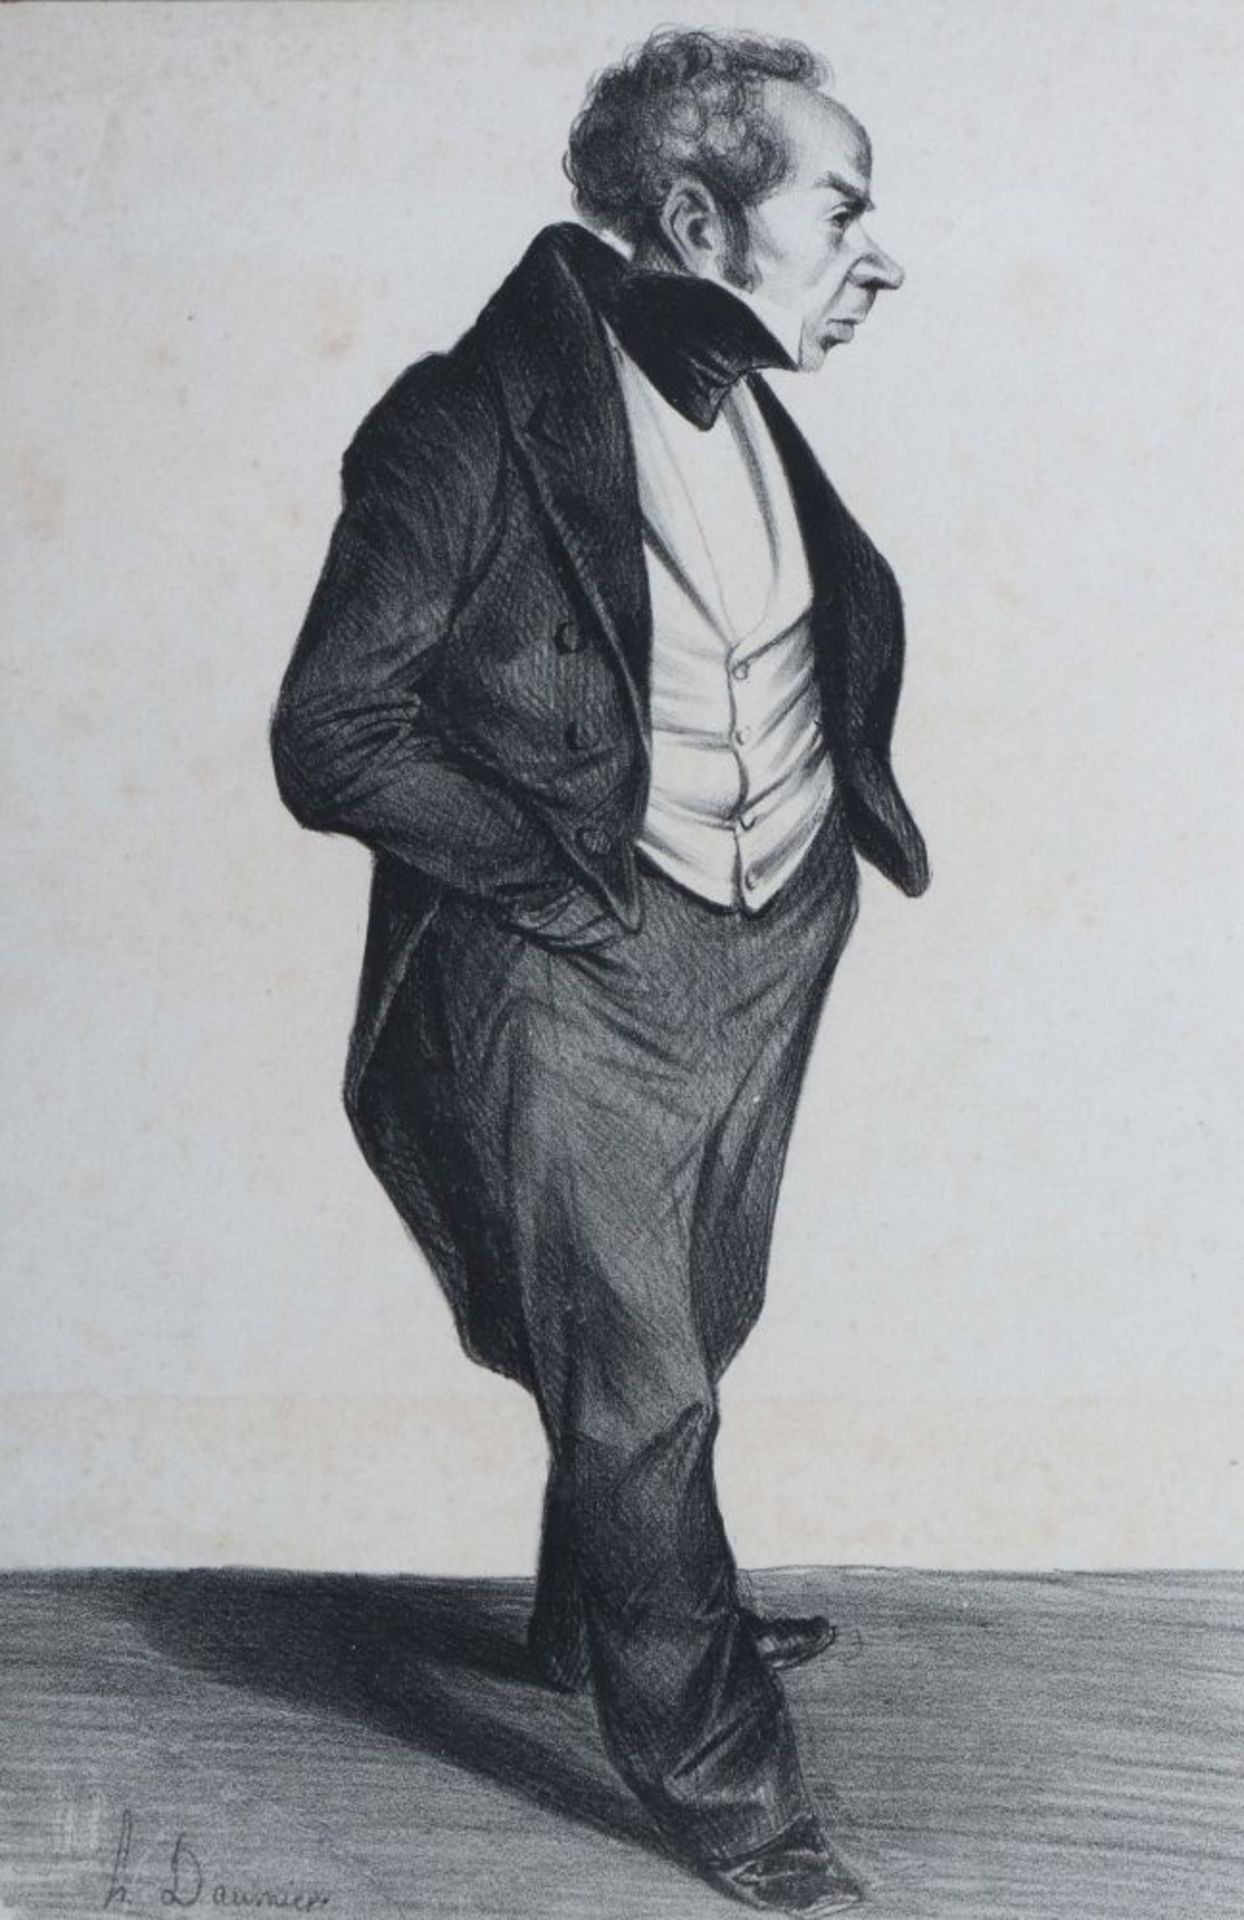 Daumier, Honoré Marseille 1808 - 1879